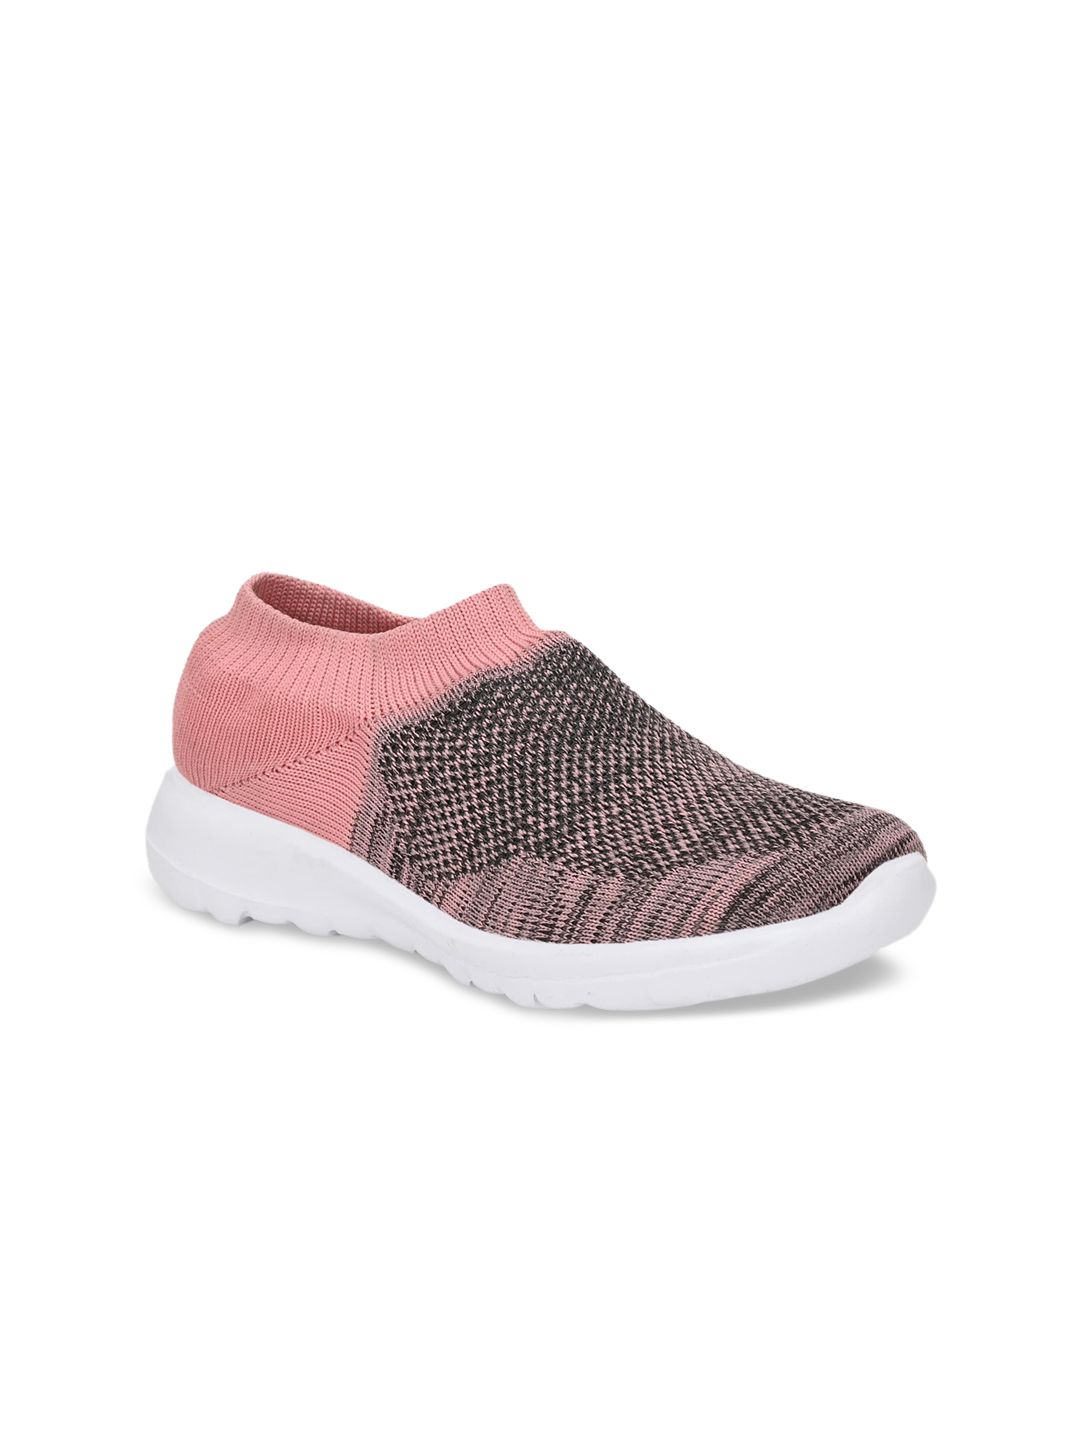 El Paso Women Pink & Grey Running Shoes Price in India